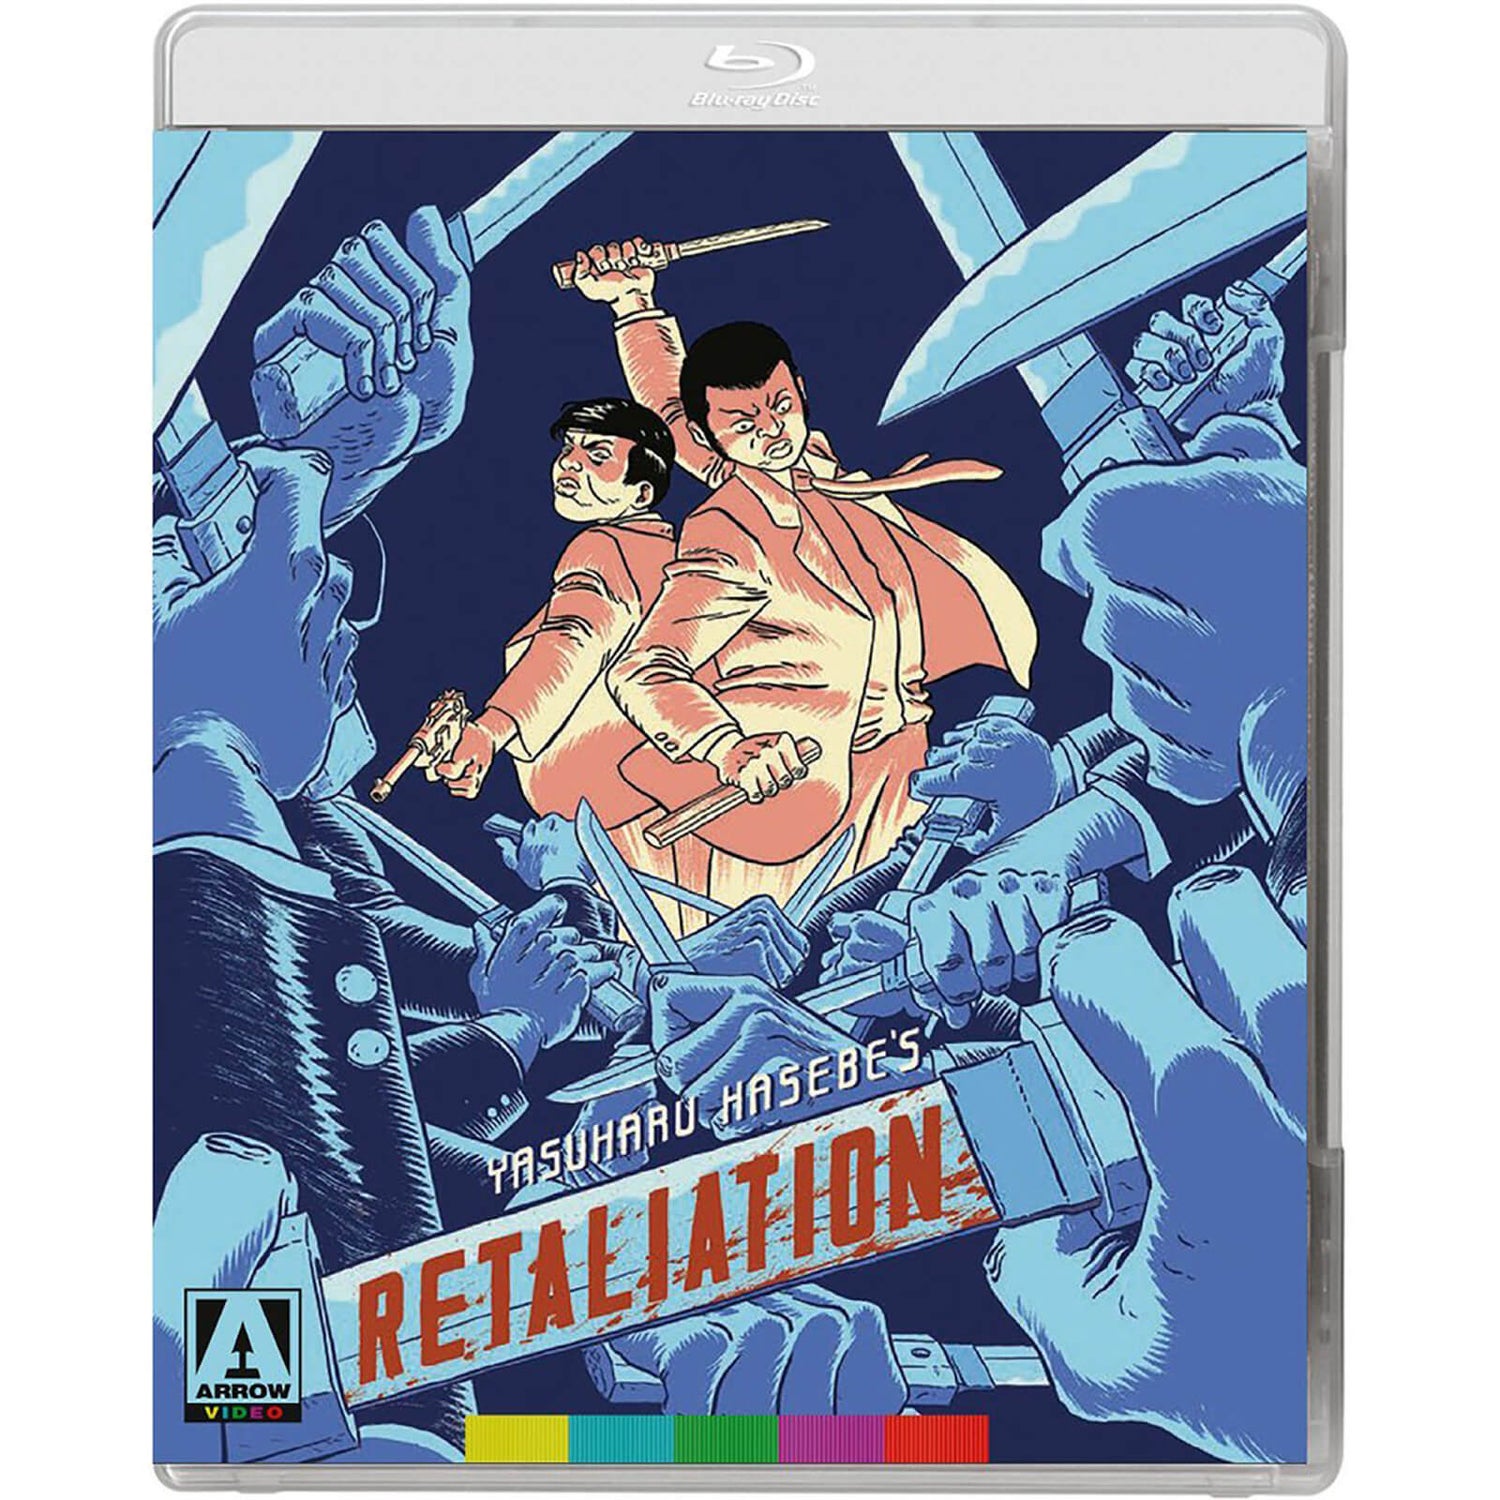 Retaliation - Includes DVD